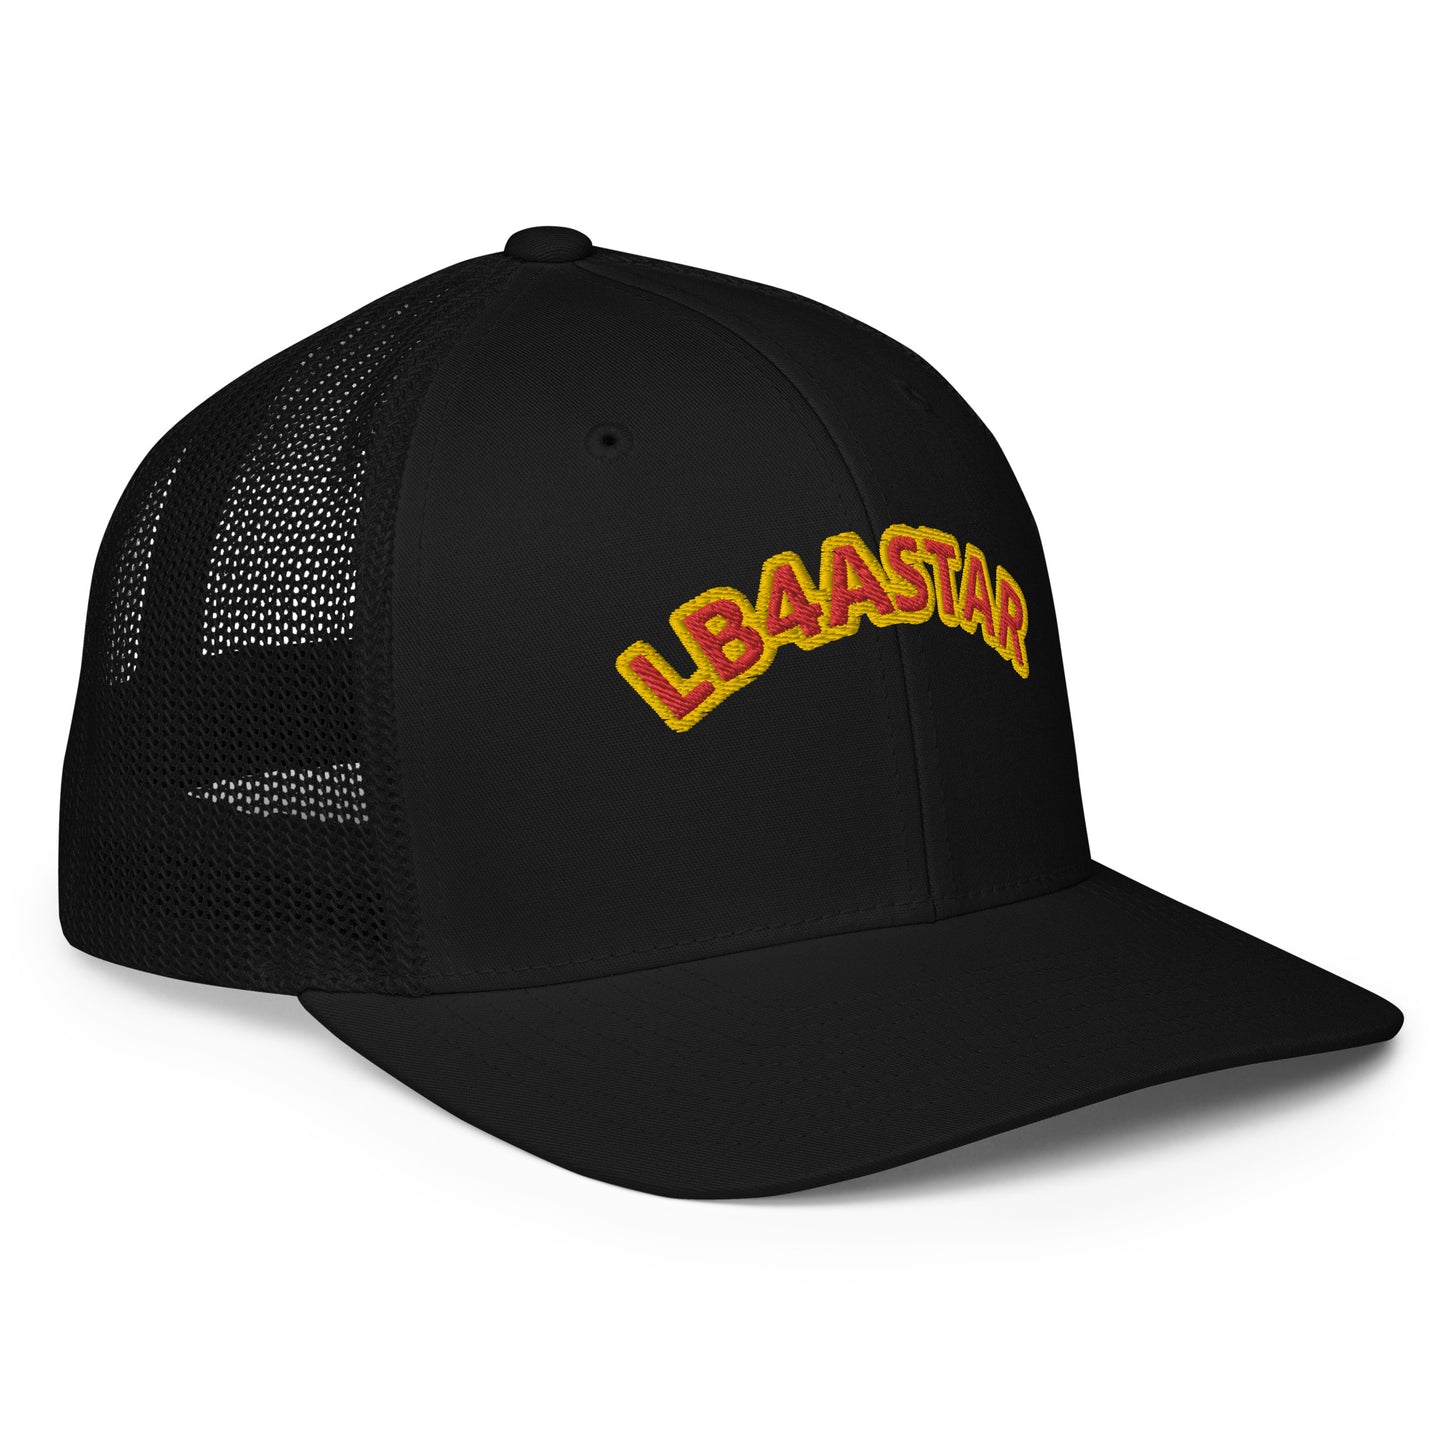 LB4ASTAR trucker cap